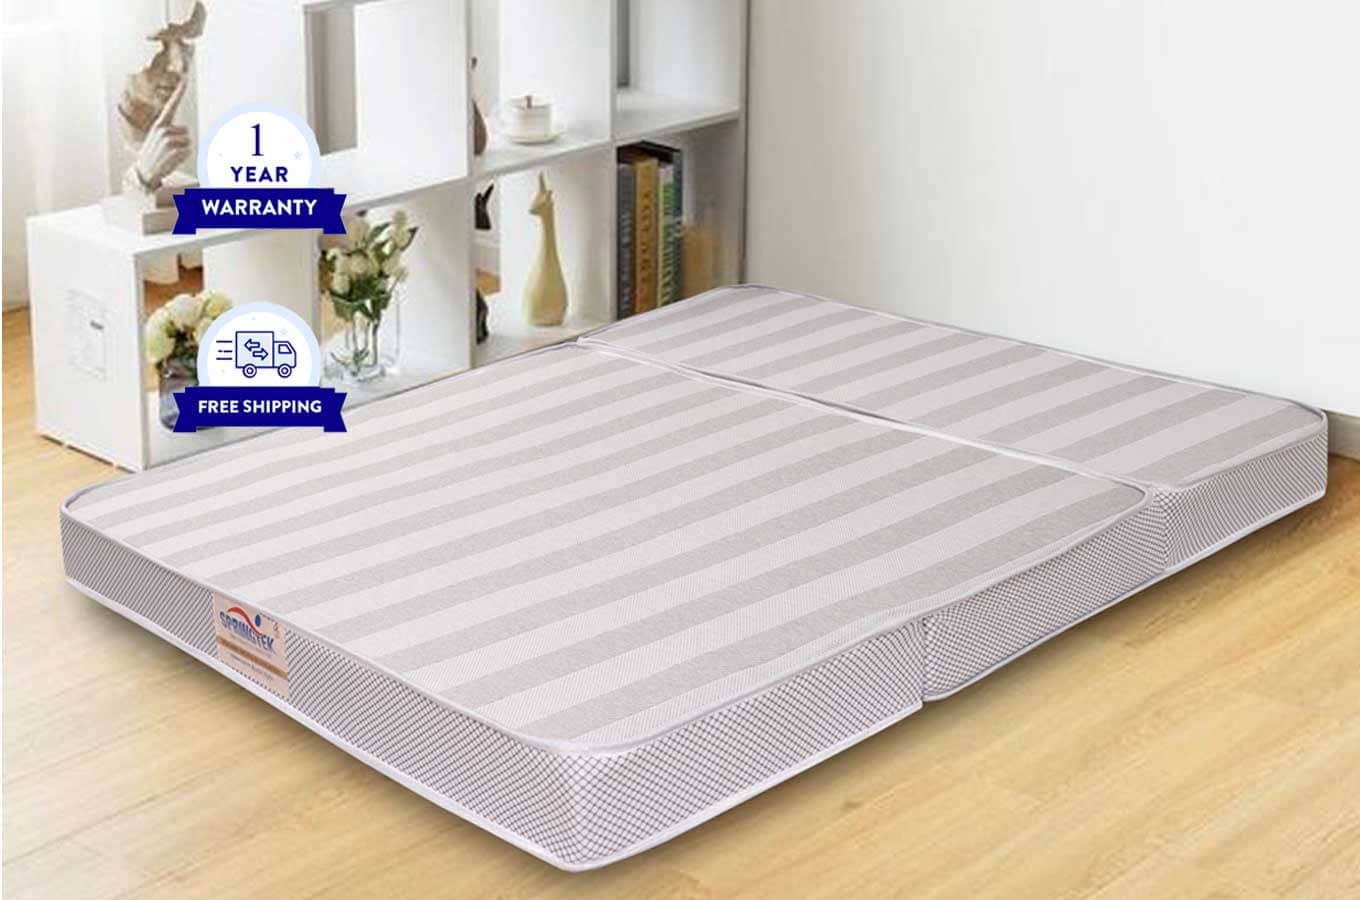 4 by 6 mattress price in uganda